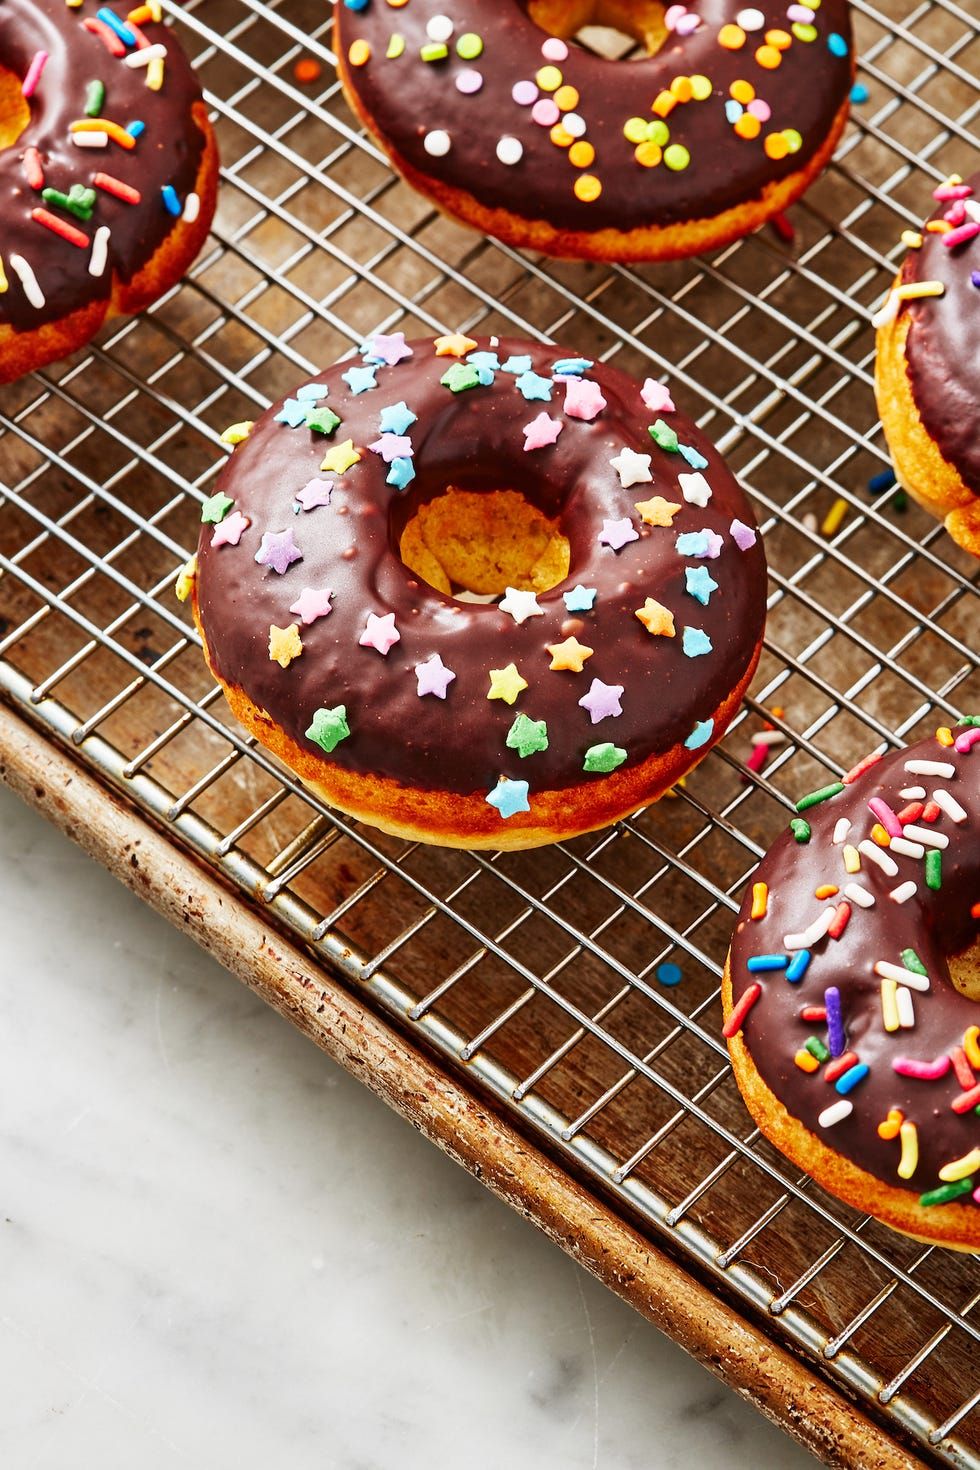 Baked Maple Glazed Donuts - Sally's Baking Addiction